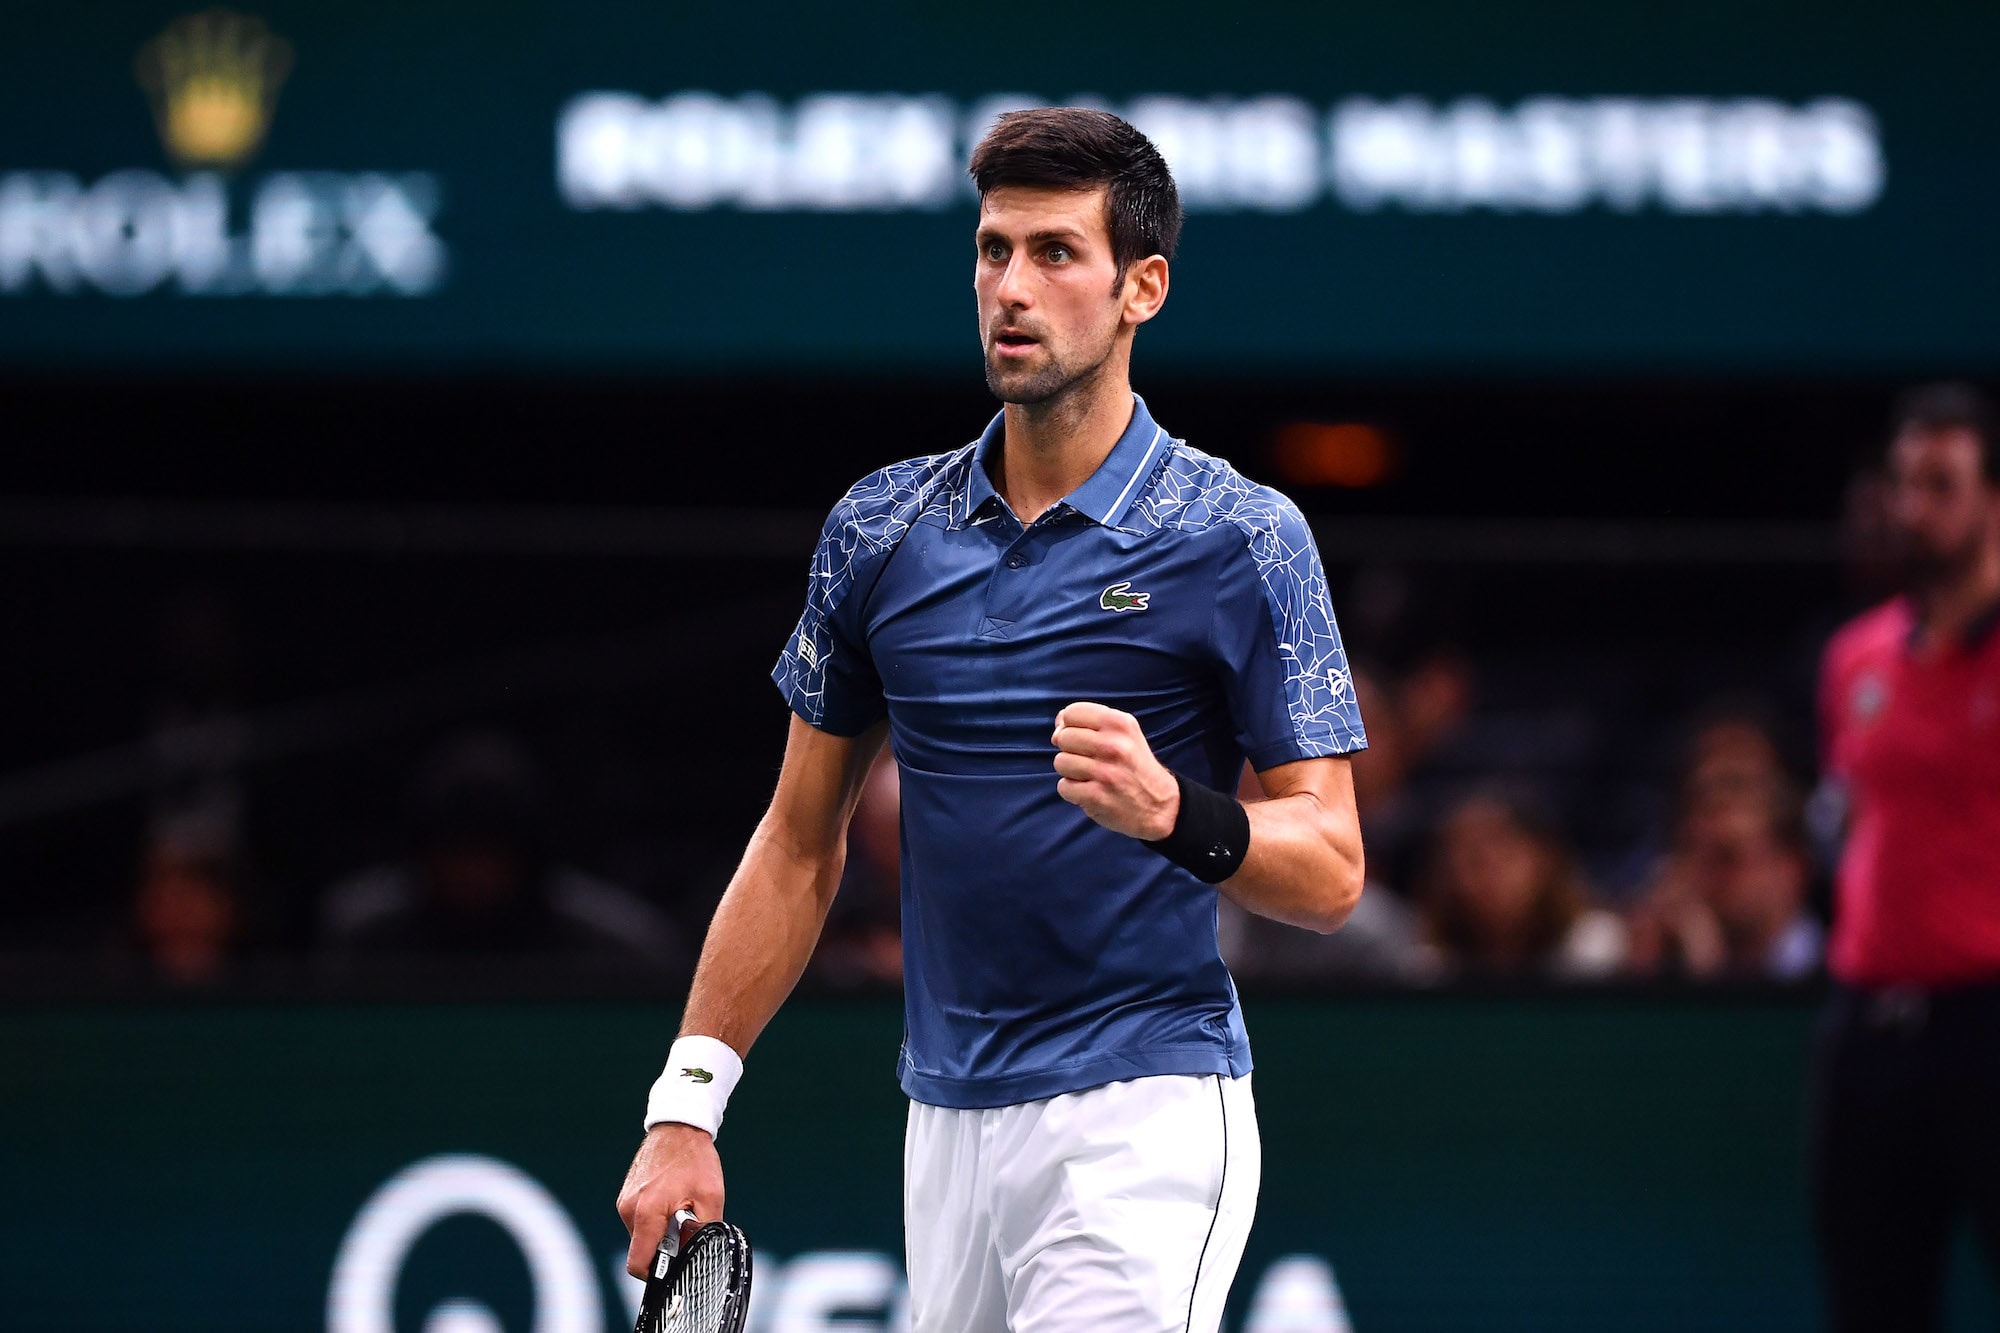 HIGHLIGHTS: Djokovic beats Sousa in Paris to extend win streak to 19